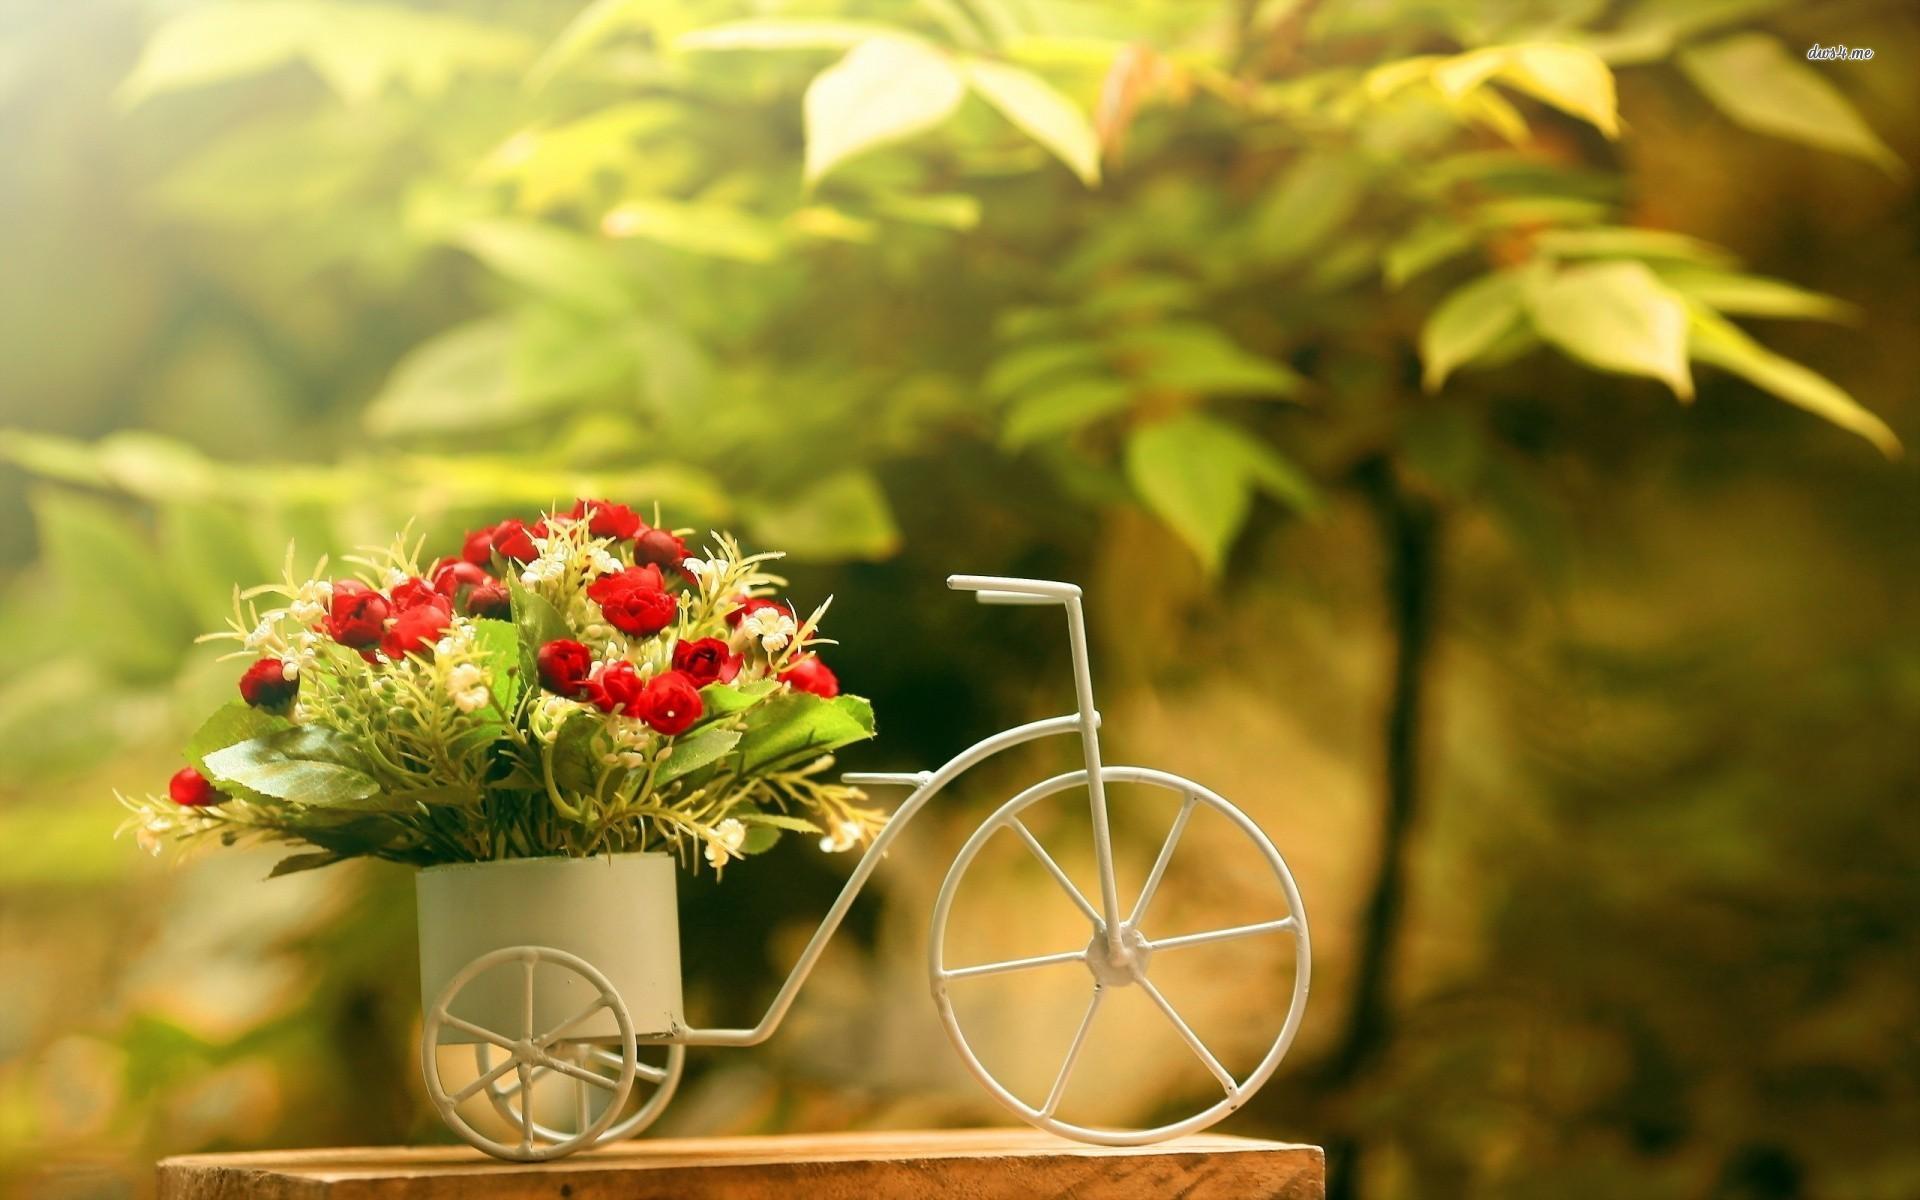 Bicycle Bike Flower Bouquet Wallpaper